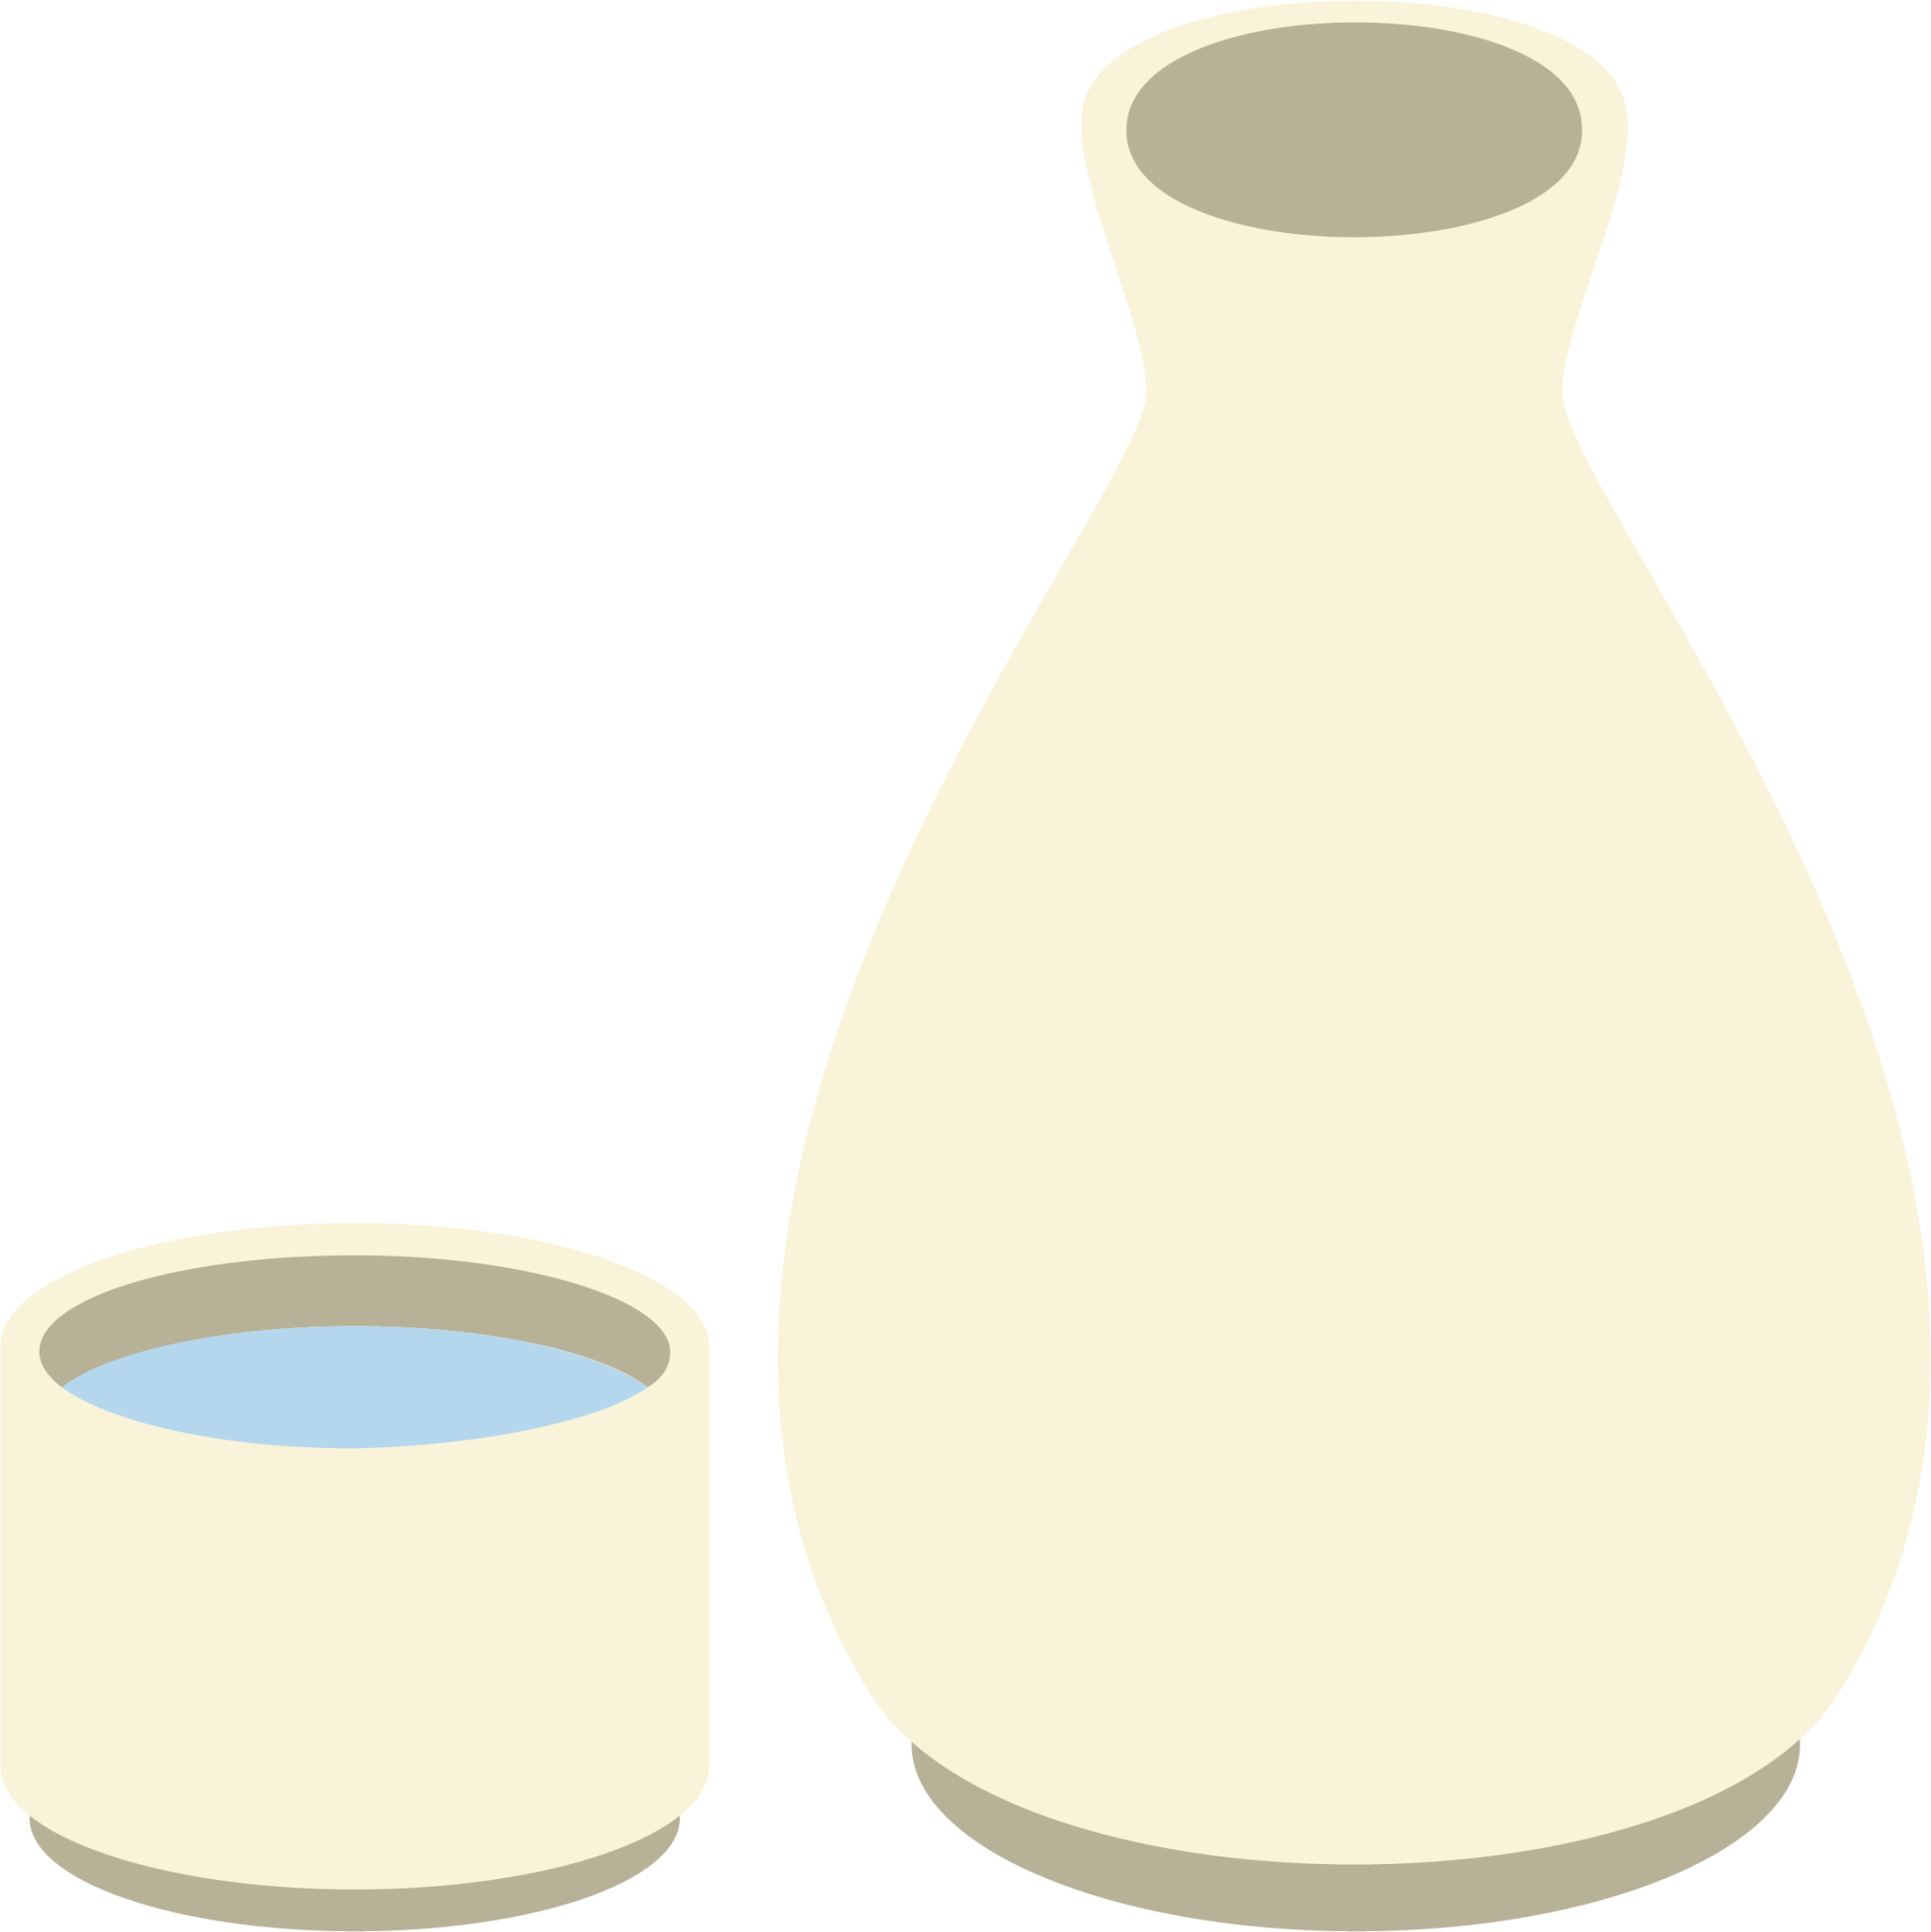 sake bottle and cup emoji